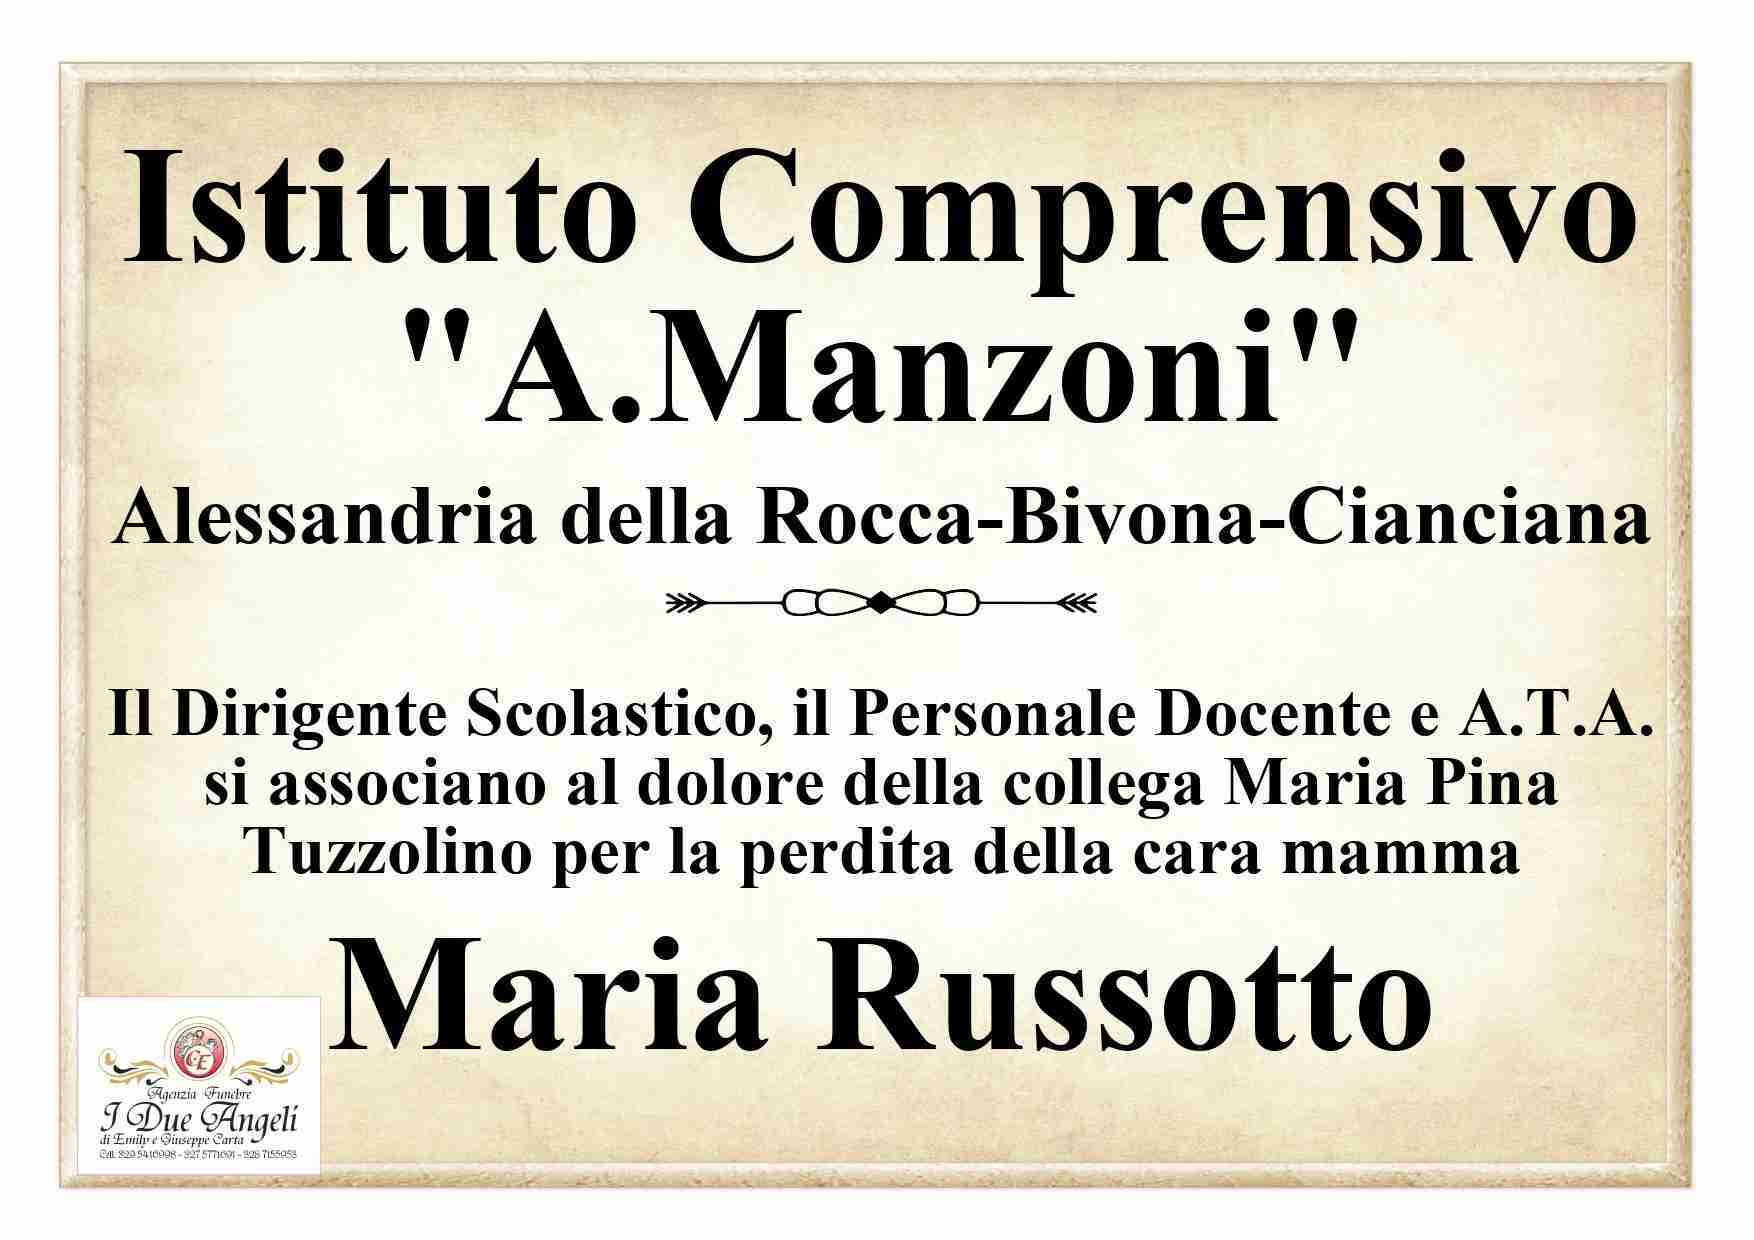 Maria Russotto